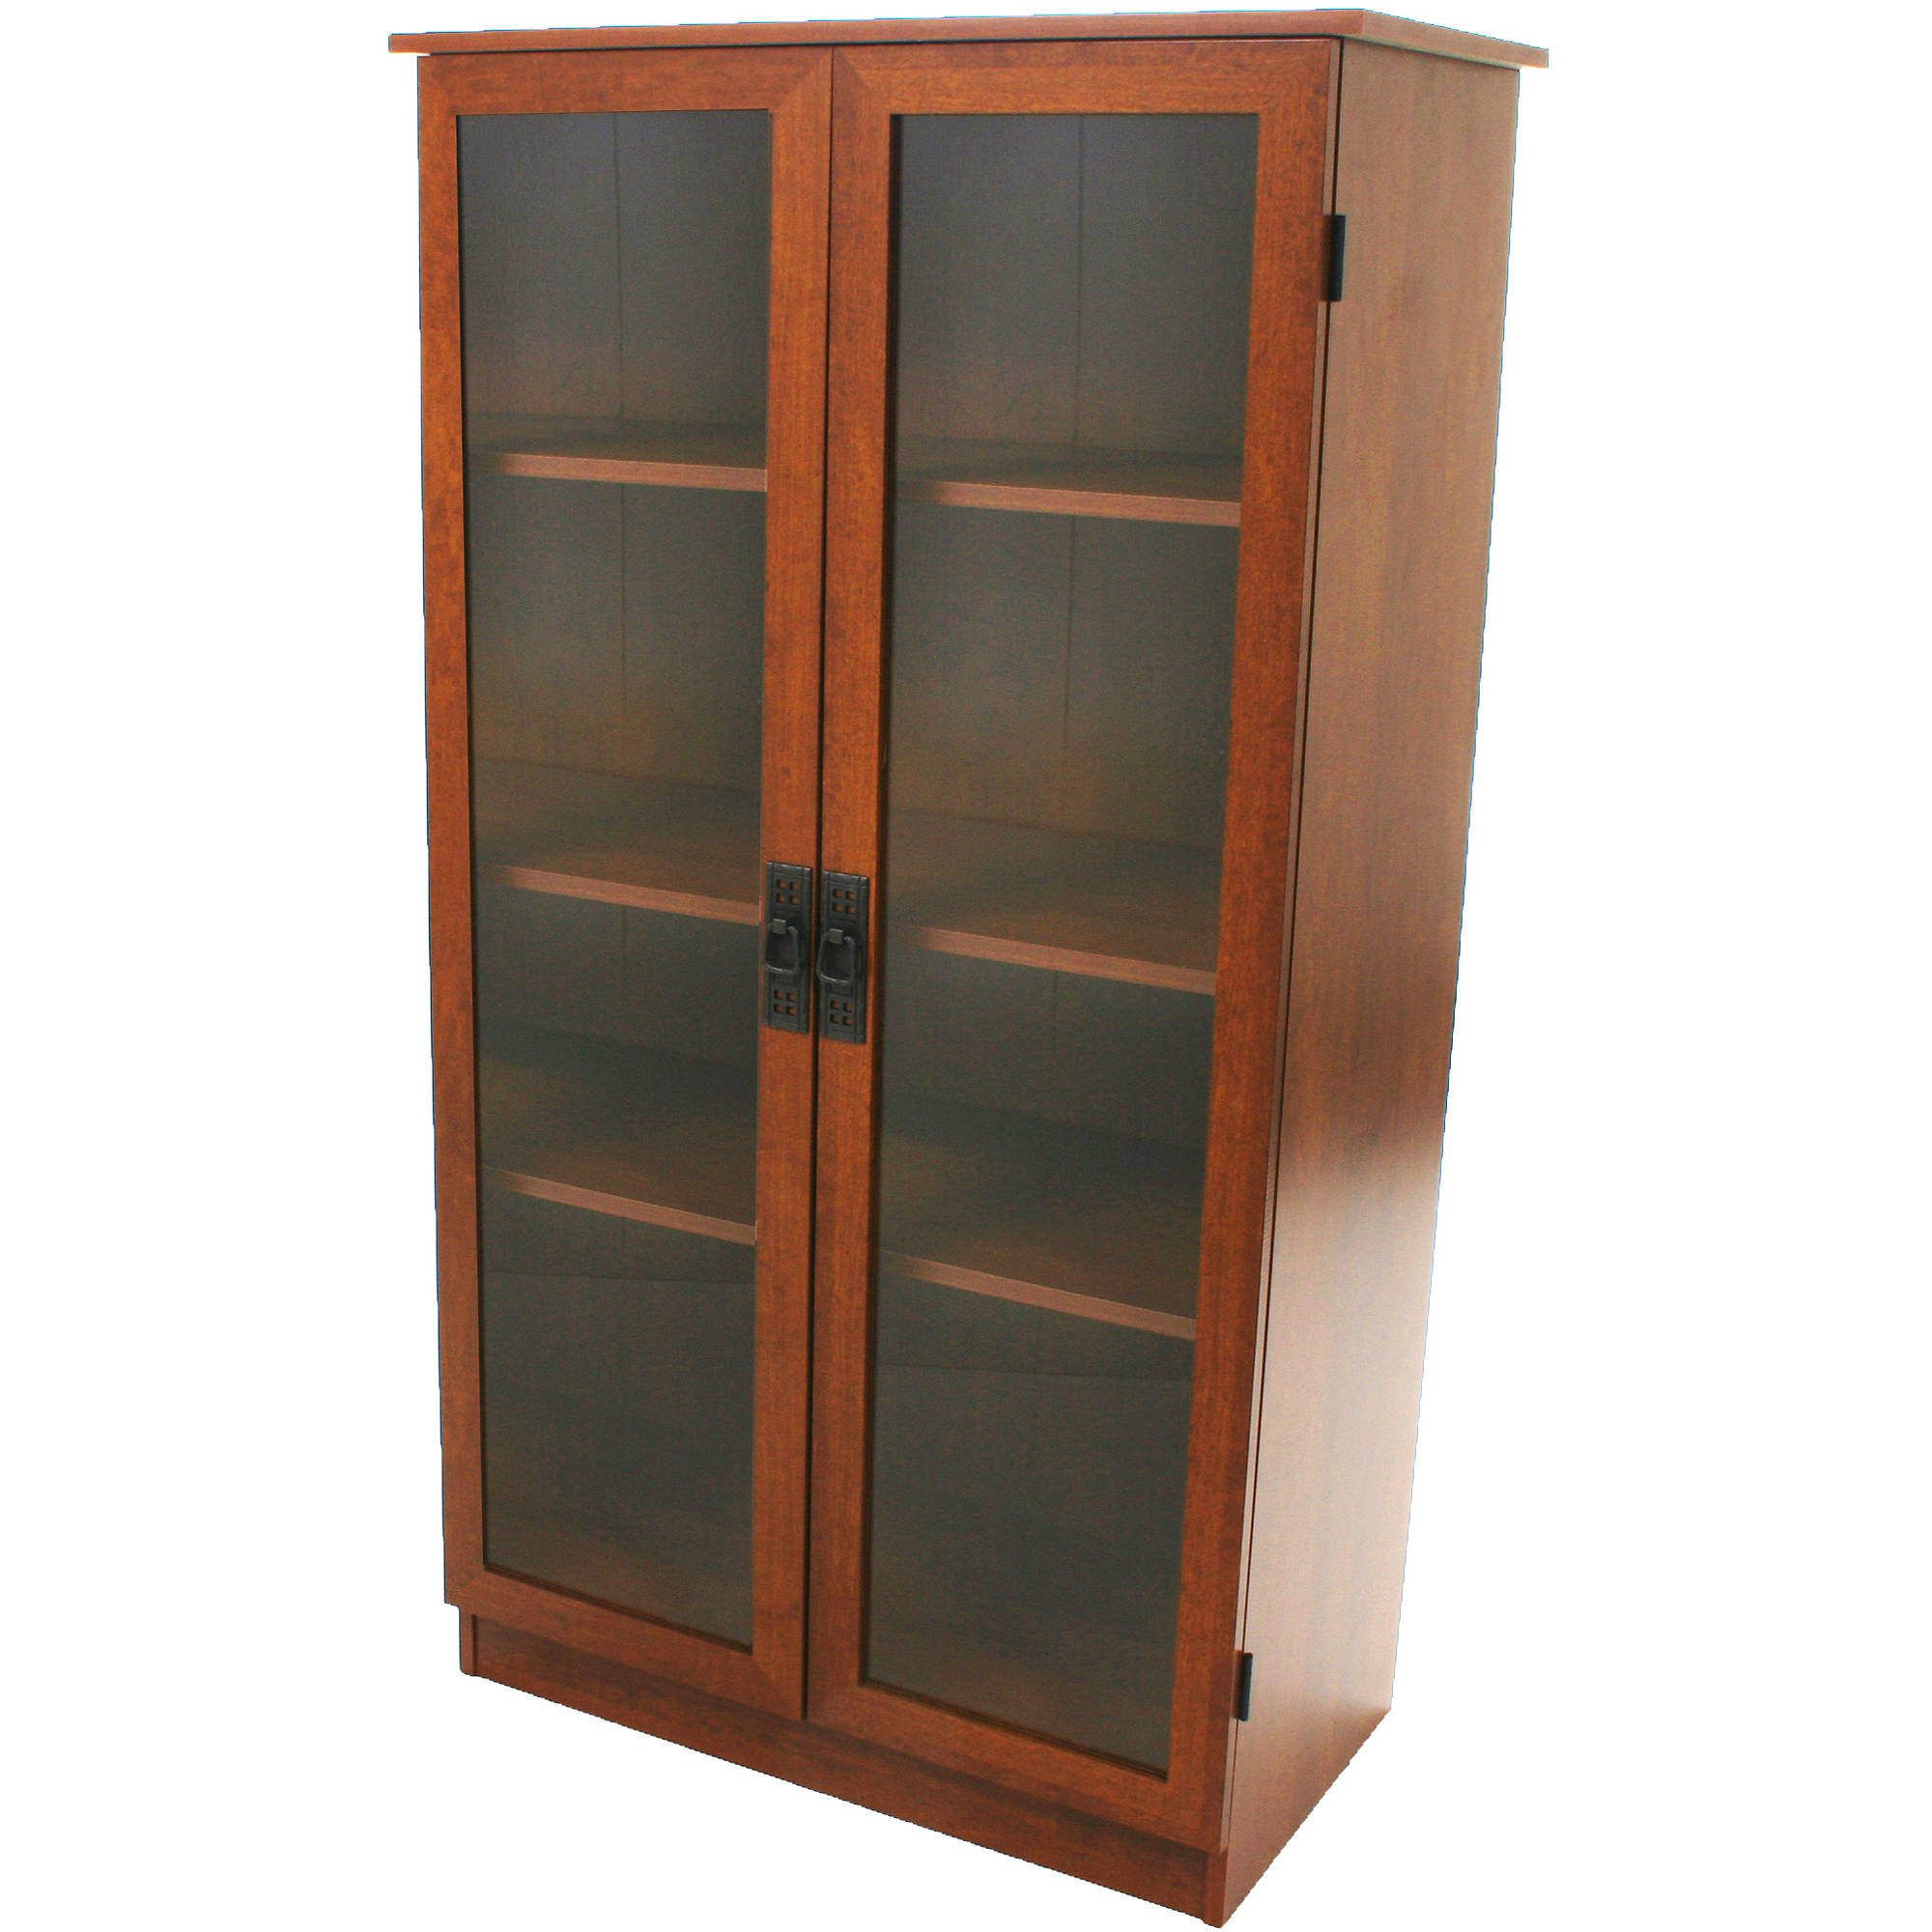 Bookcase Storage Cabinet 4 Shelves 2 Glass Doors Bookshelf Brown